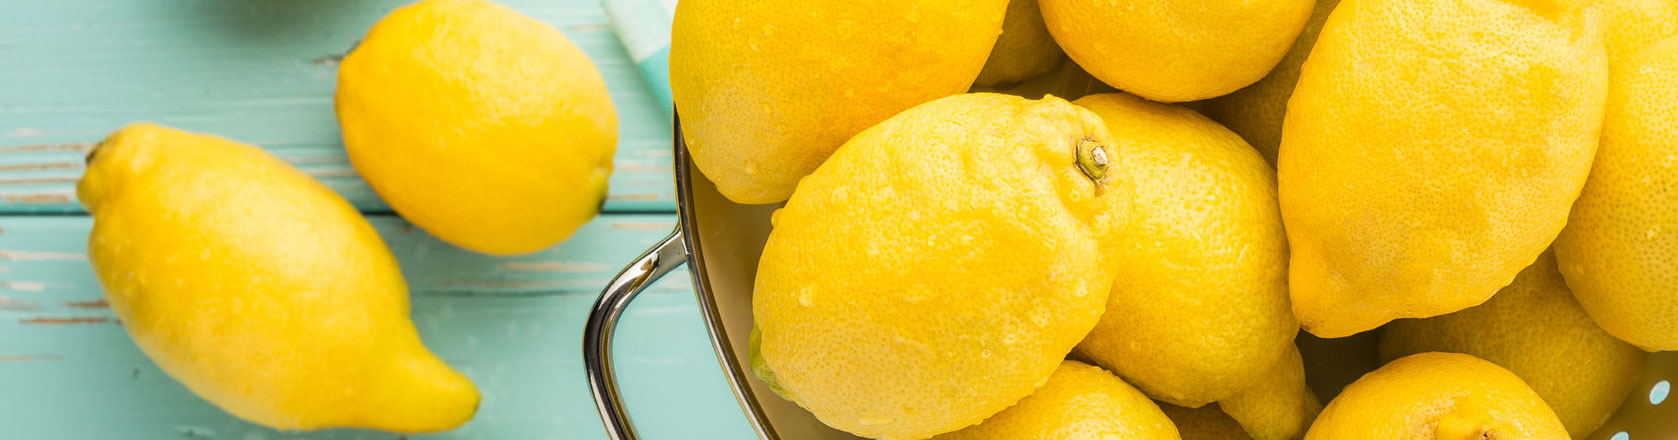 fresh lemons have many health benefits like lemongrass